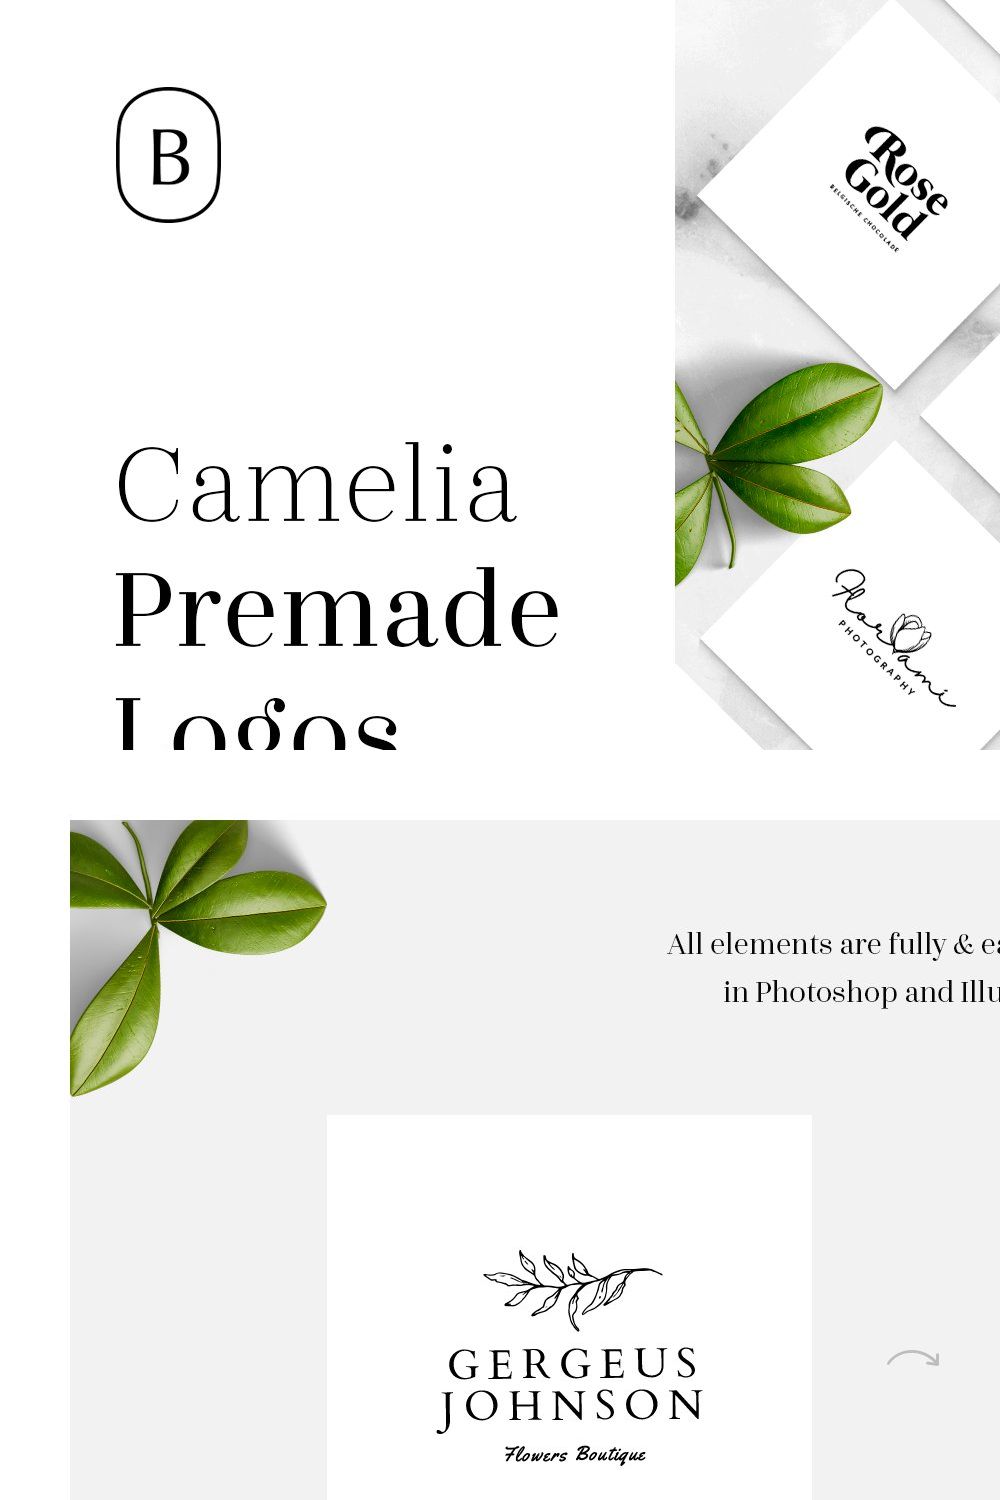 Camelia - 50 Premium Logo Templates pinterest preview image.